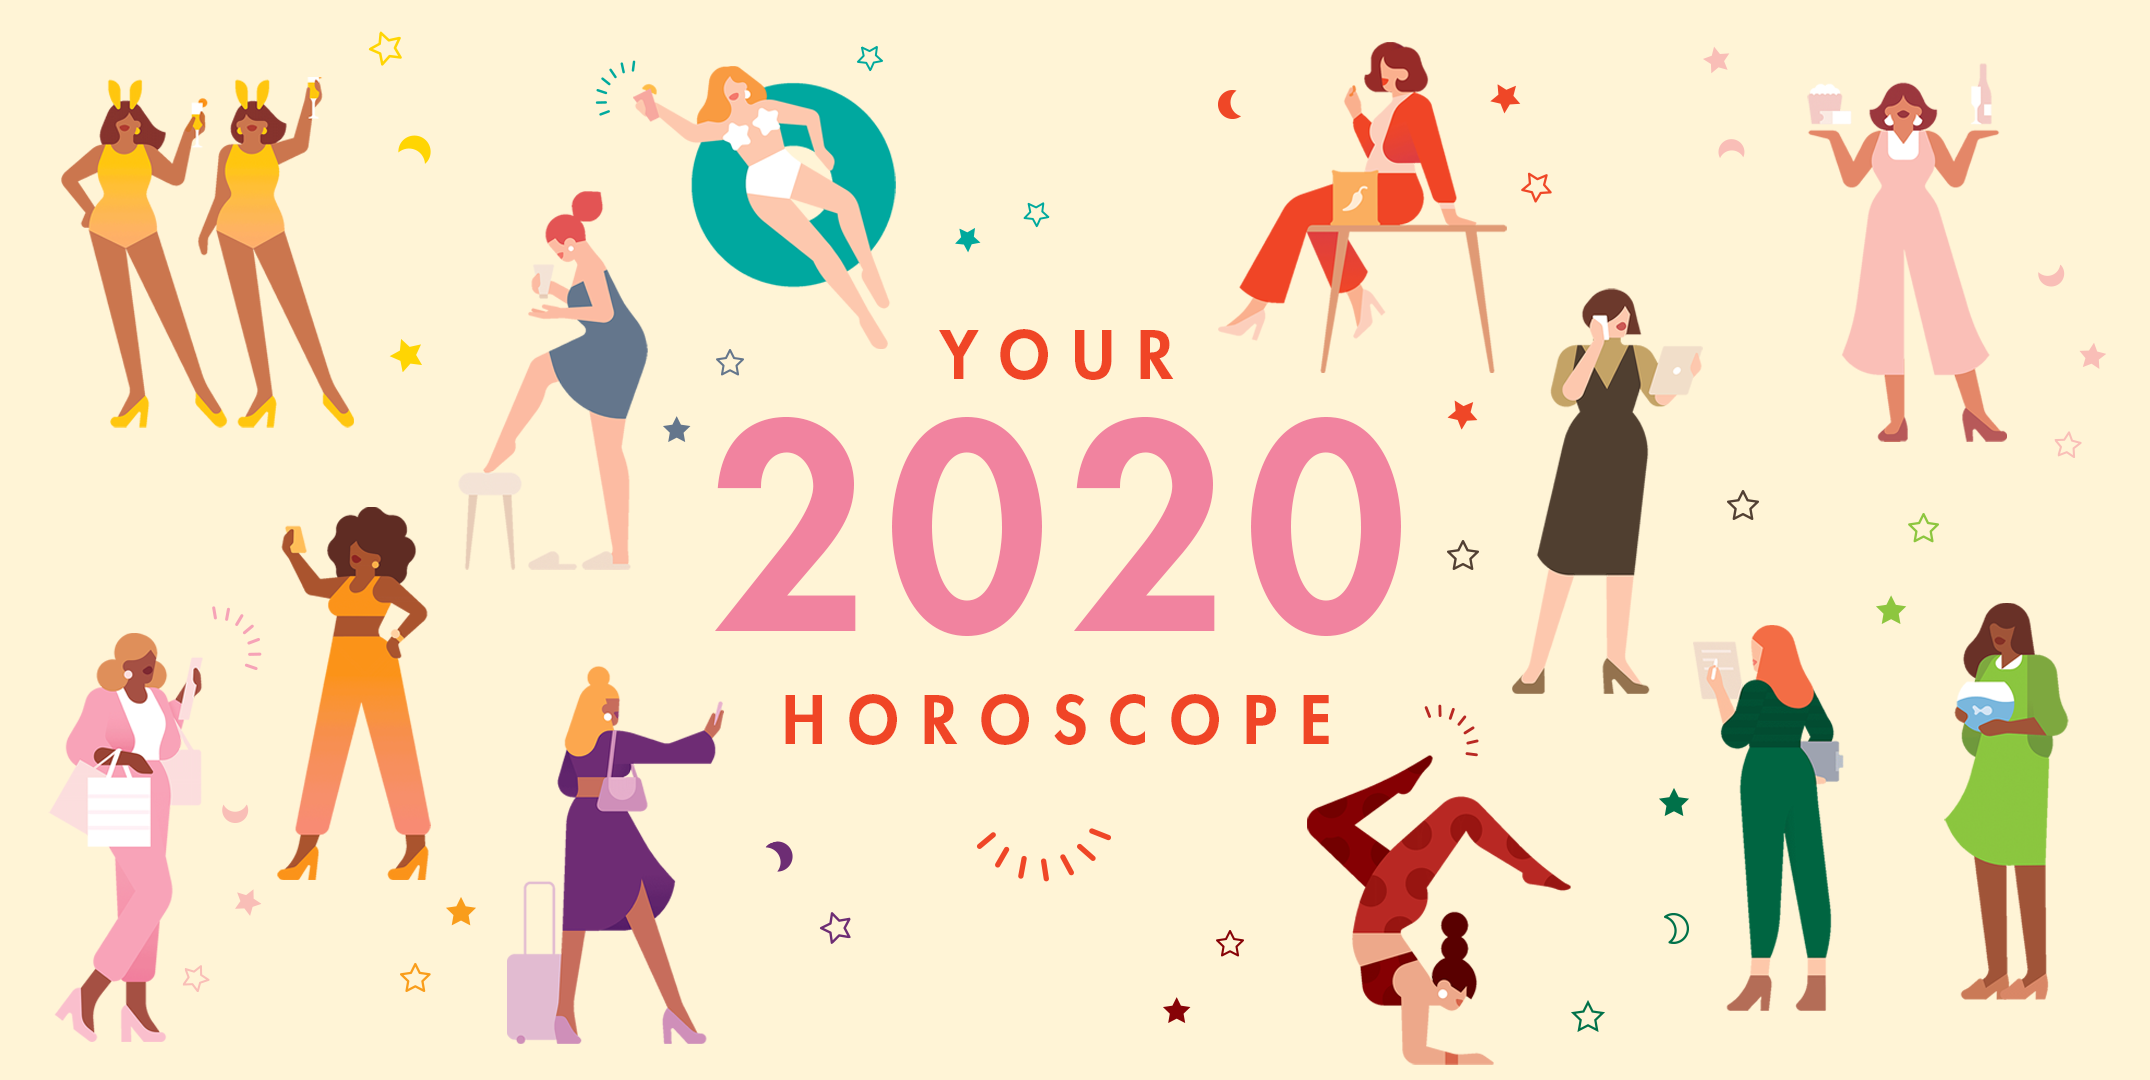 cosmopolitan snapchat horoscope march 17